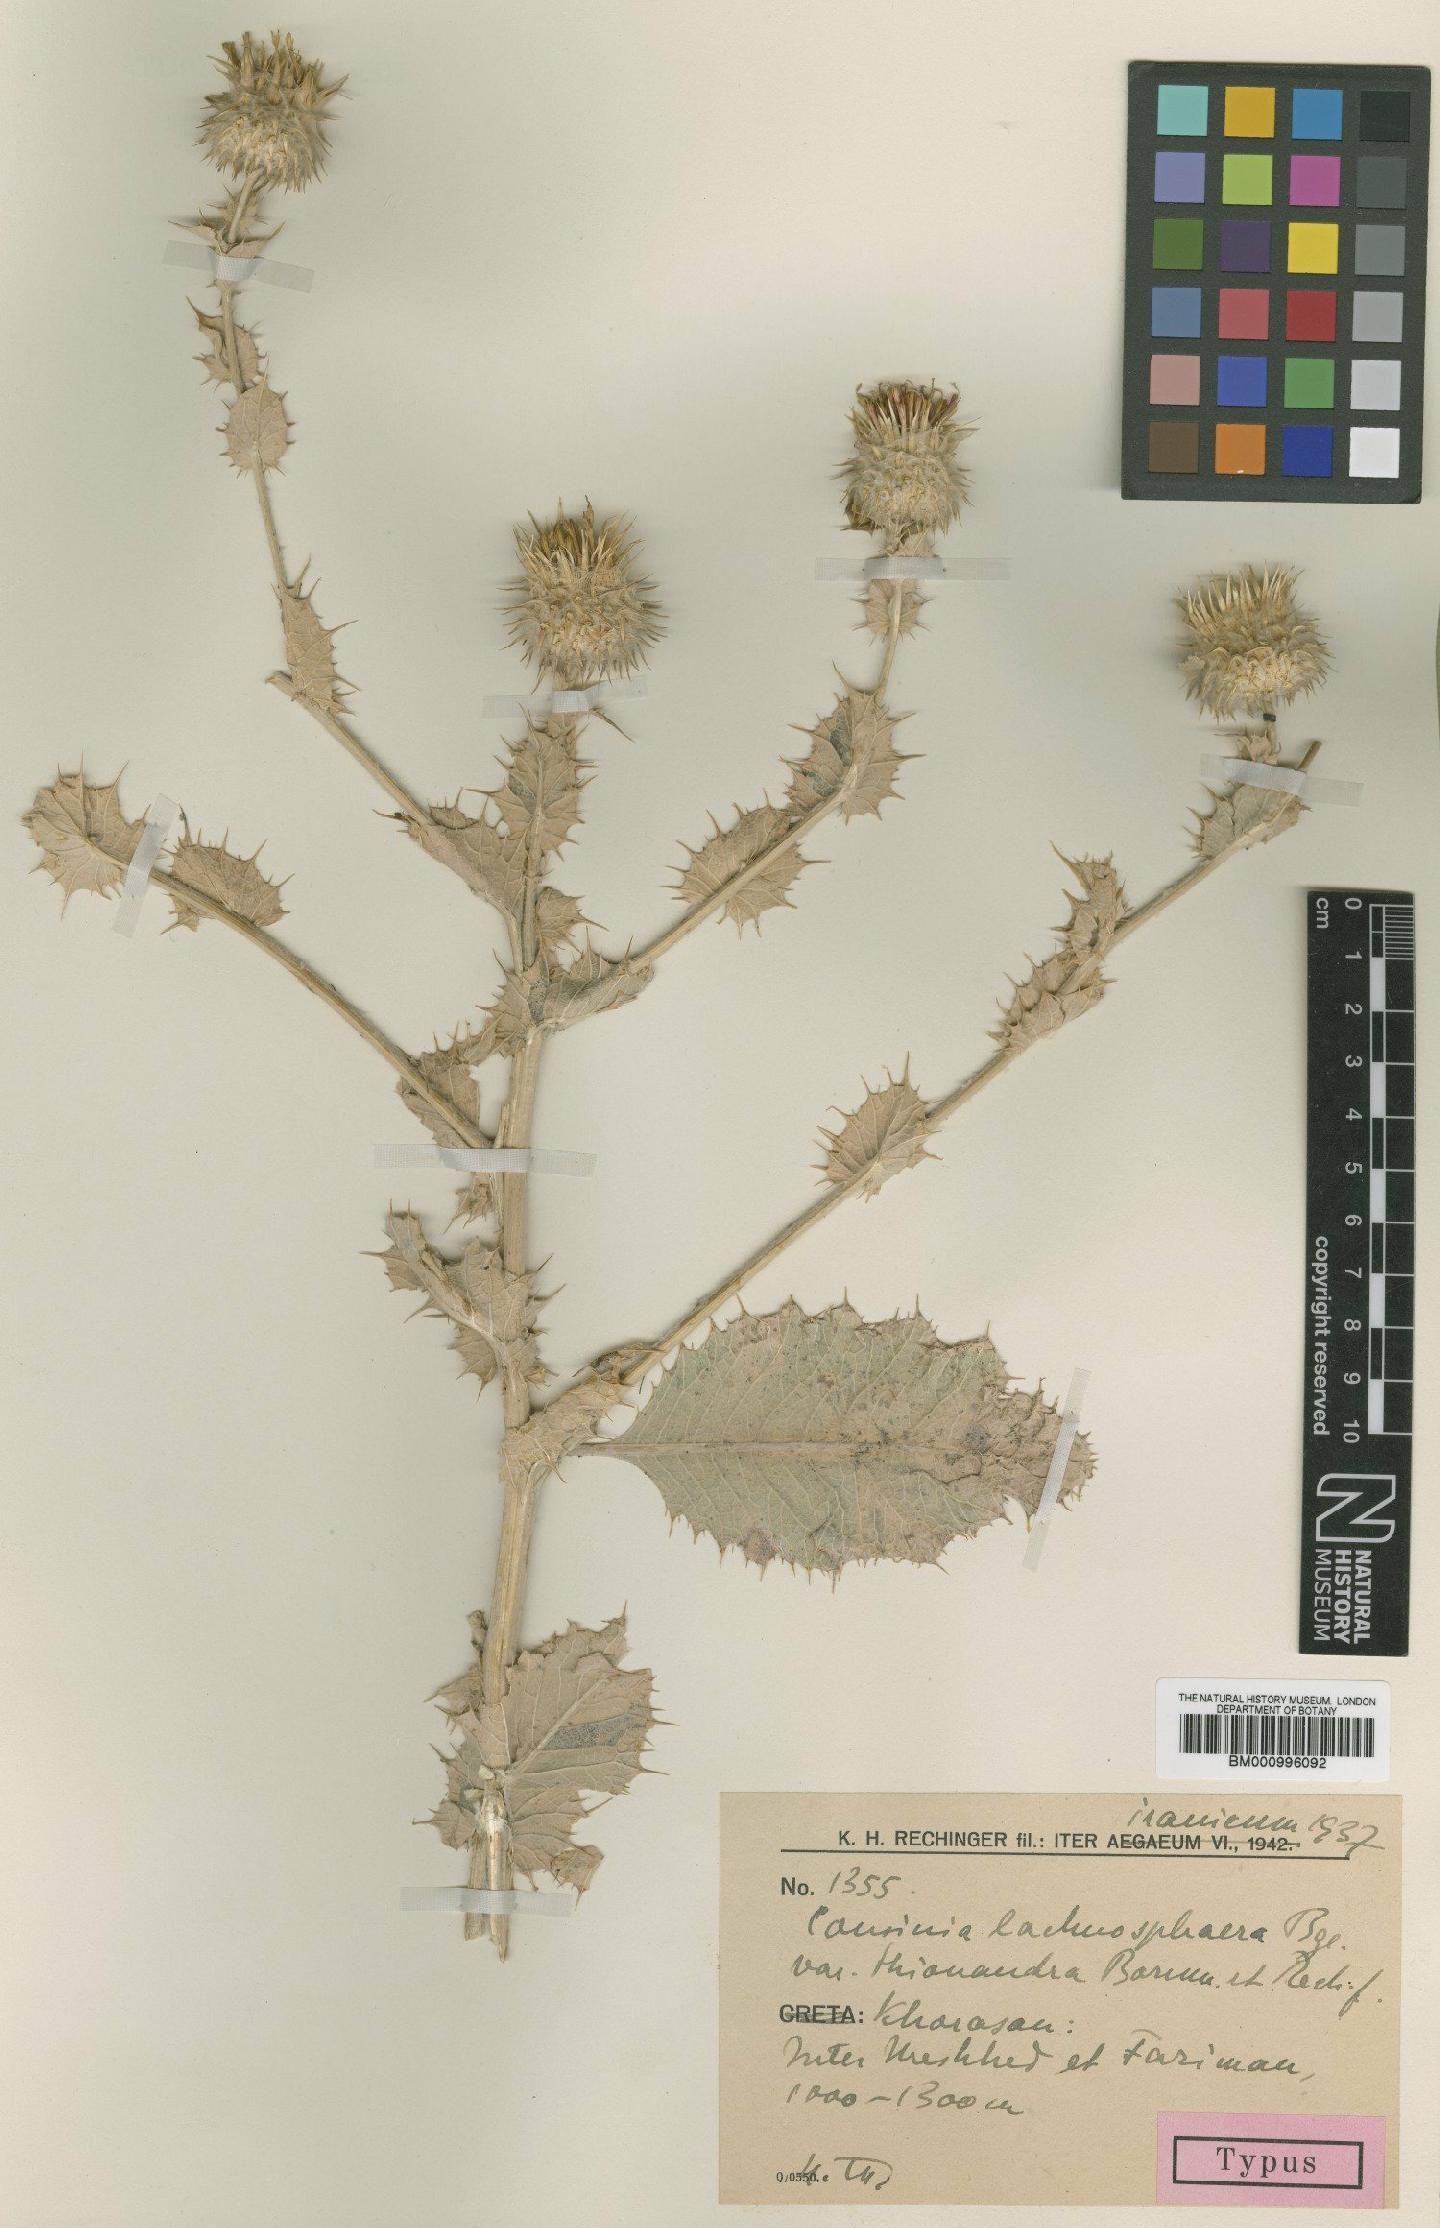 To NHMUK collection (Cousinia lachnosphaera Bunge; Type; NHMUK:ecatalogue:475632)